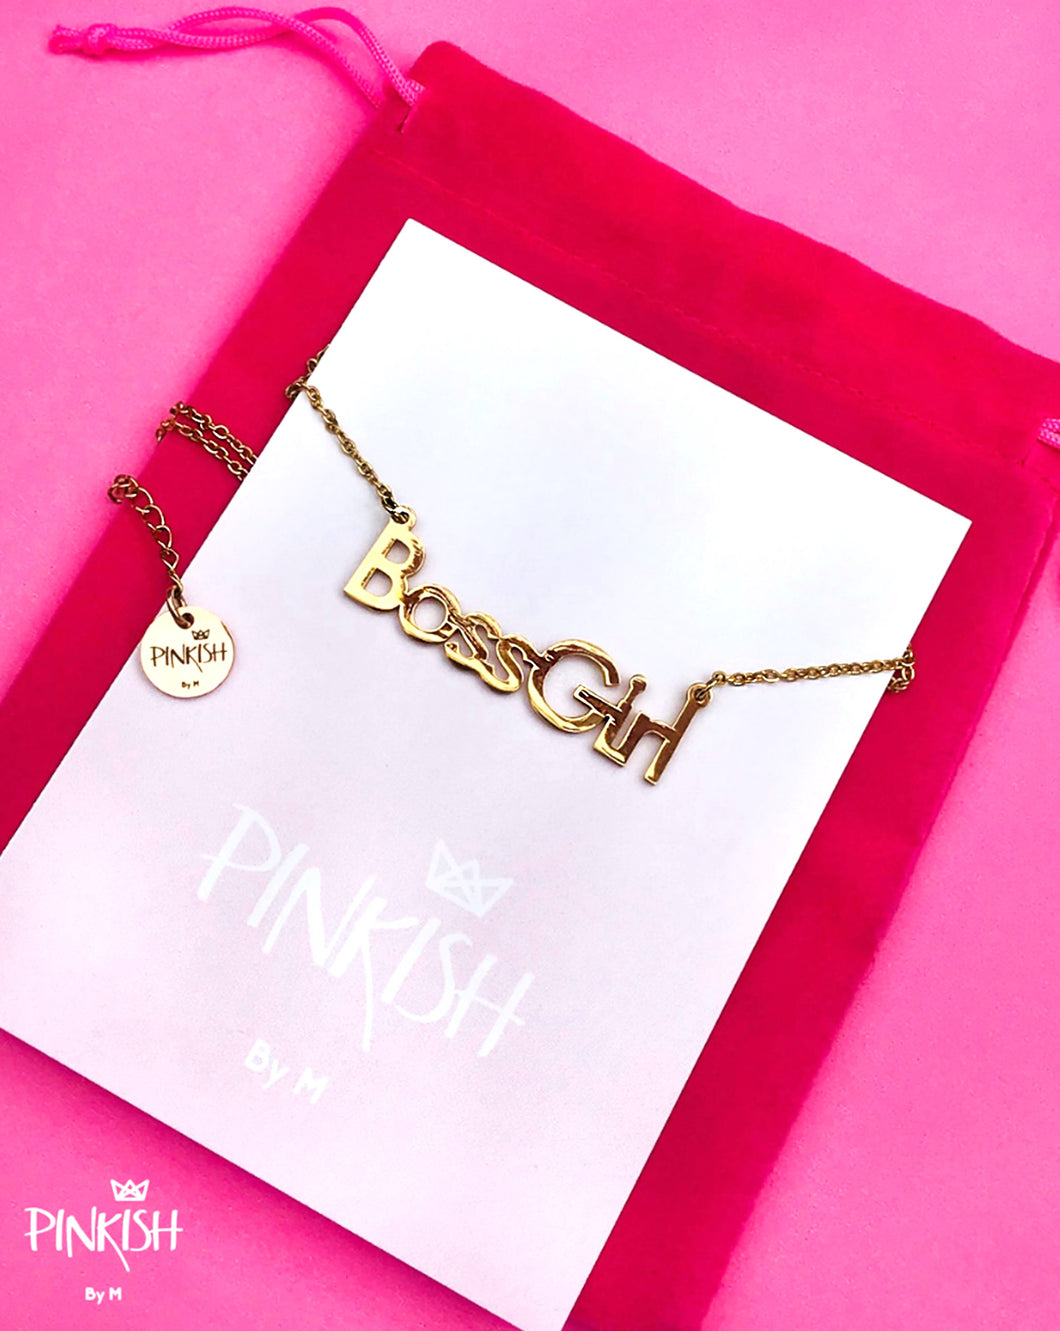 Bossgirl girlboss badass pendant gold name plate necklace waterproof jewelry for women gift for her 